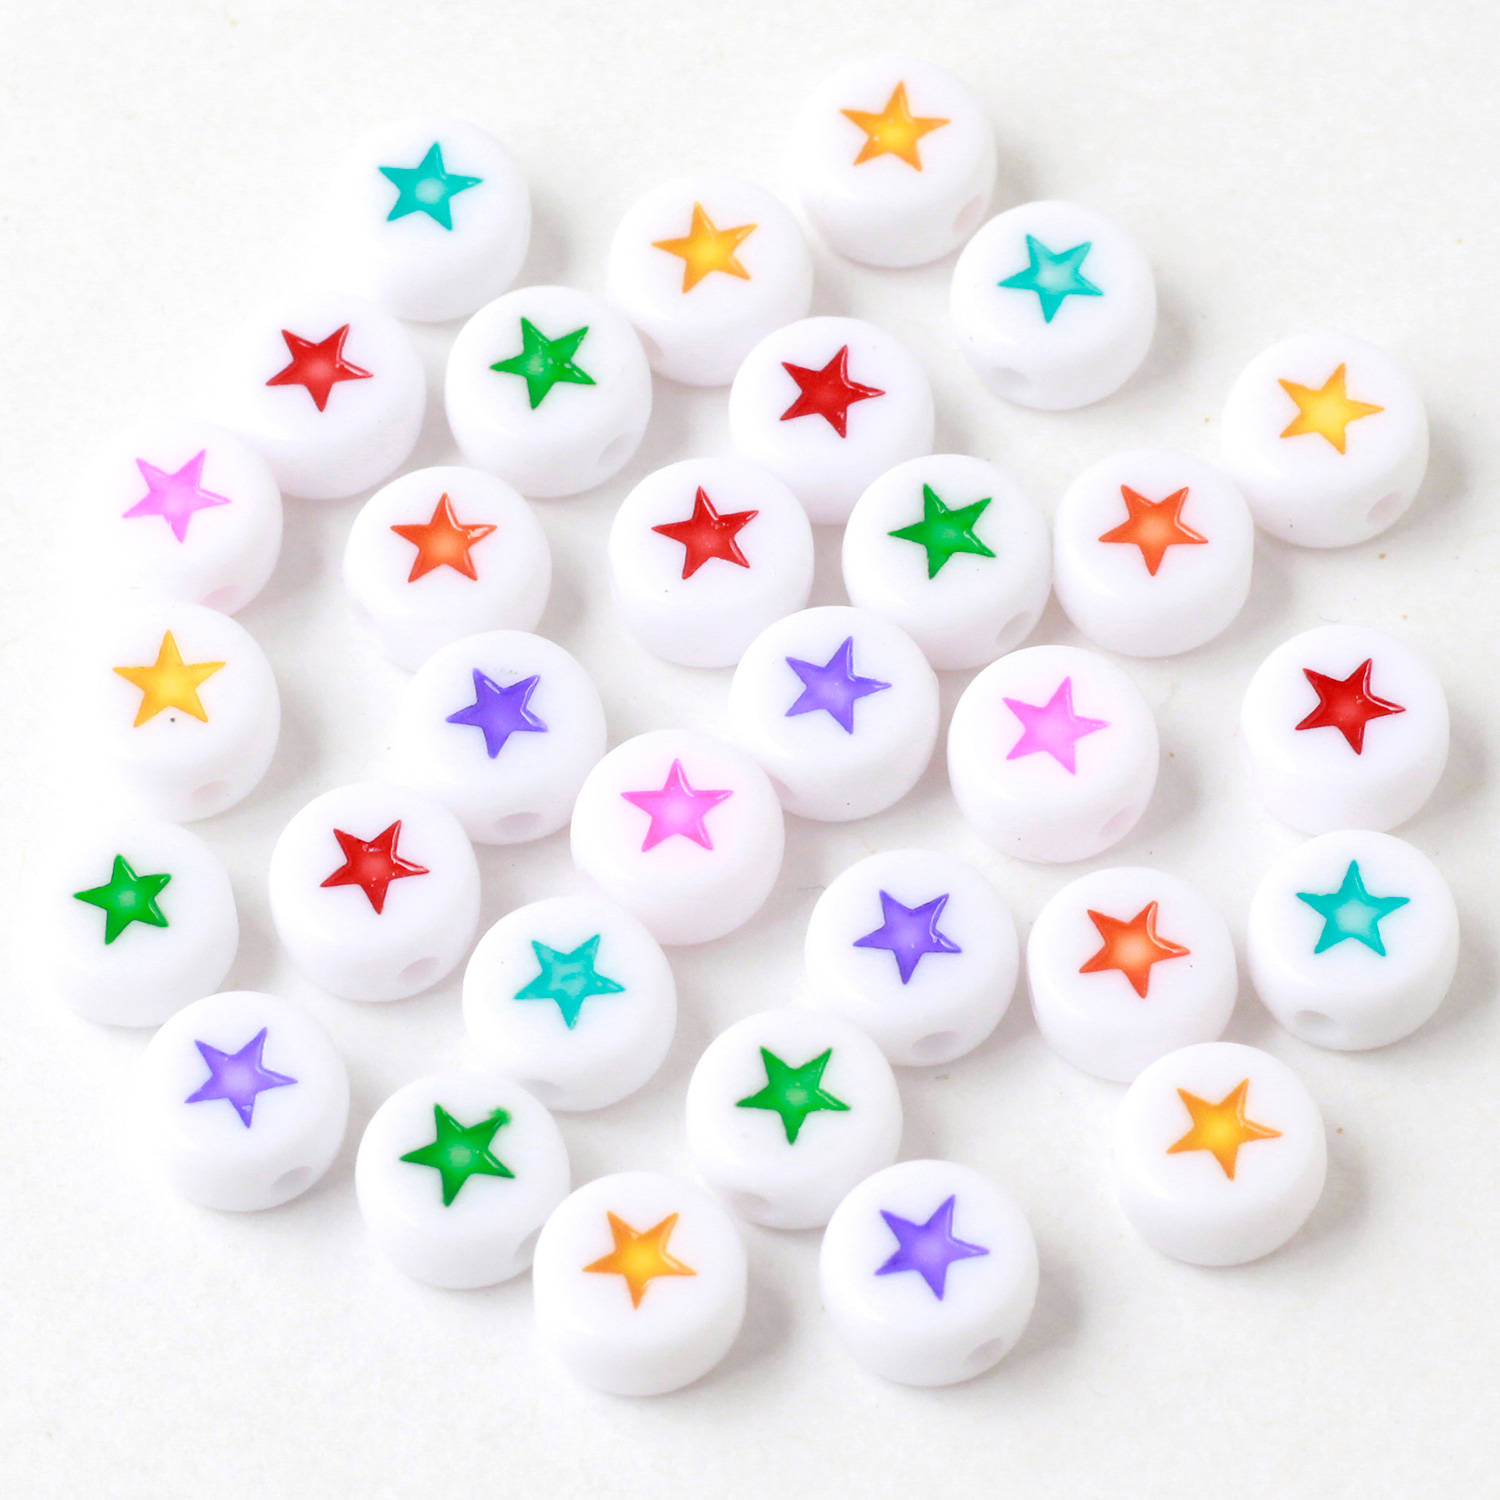 KE1443 Initial beads Star White base x Colorful (pack)